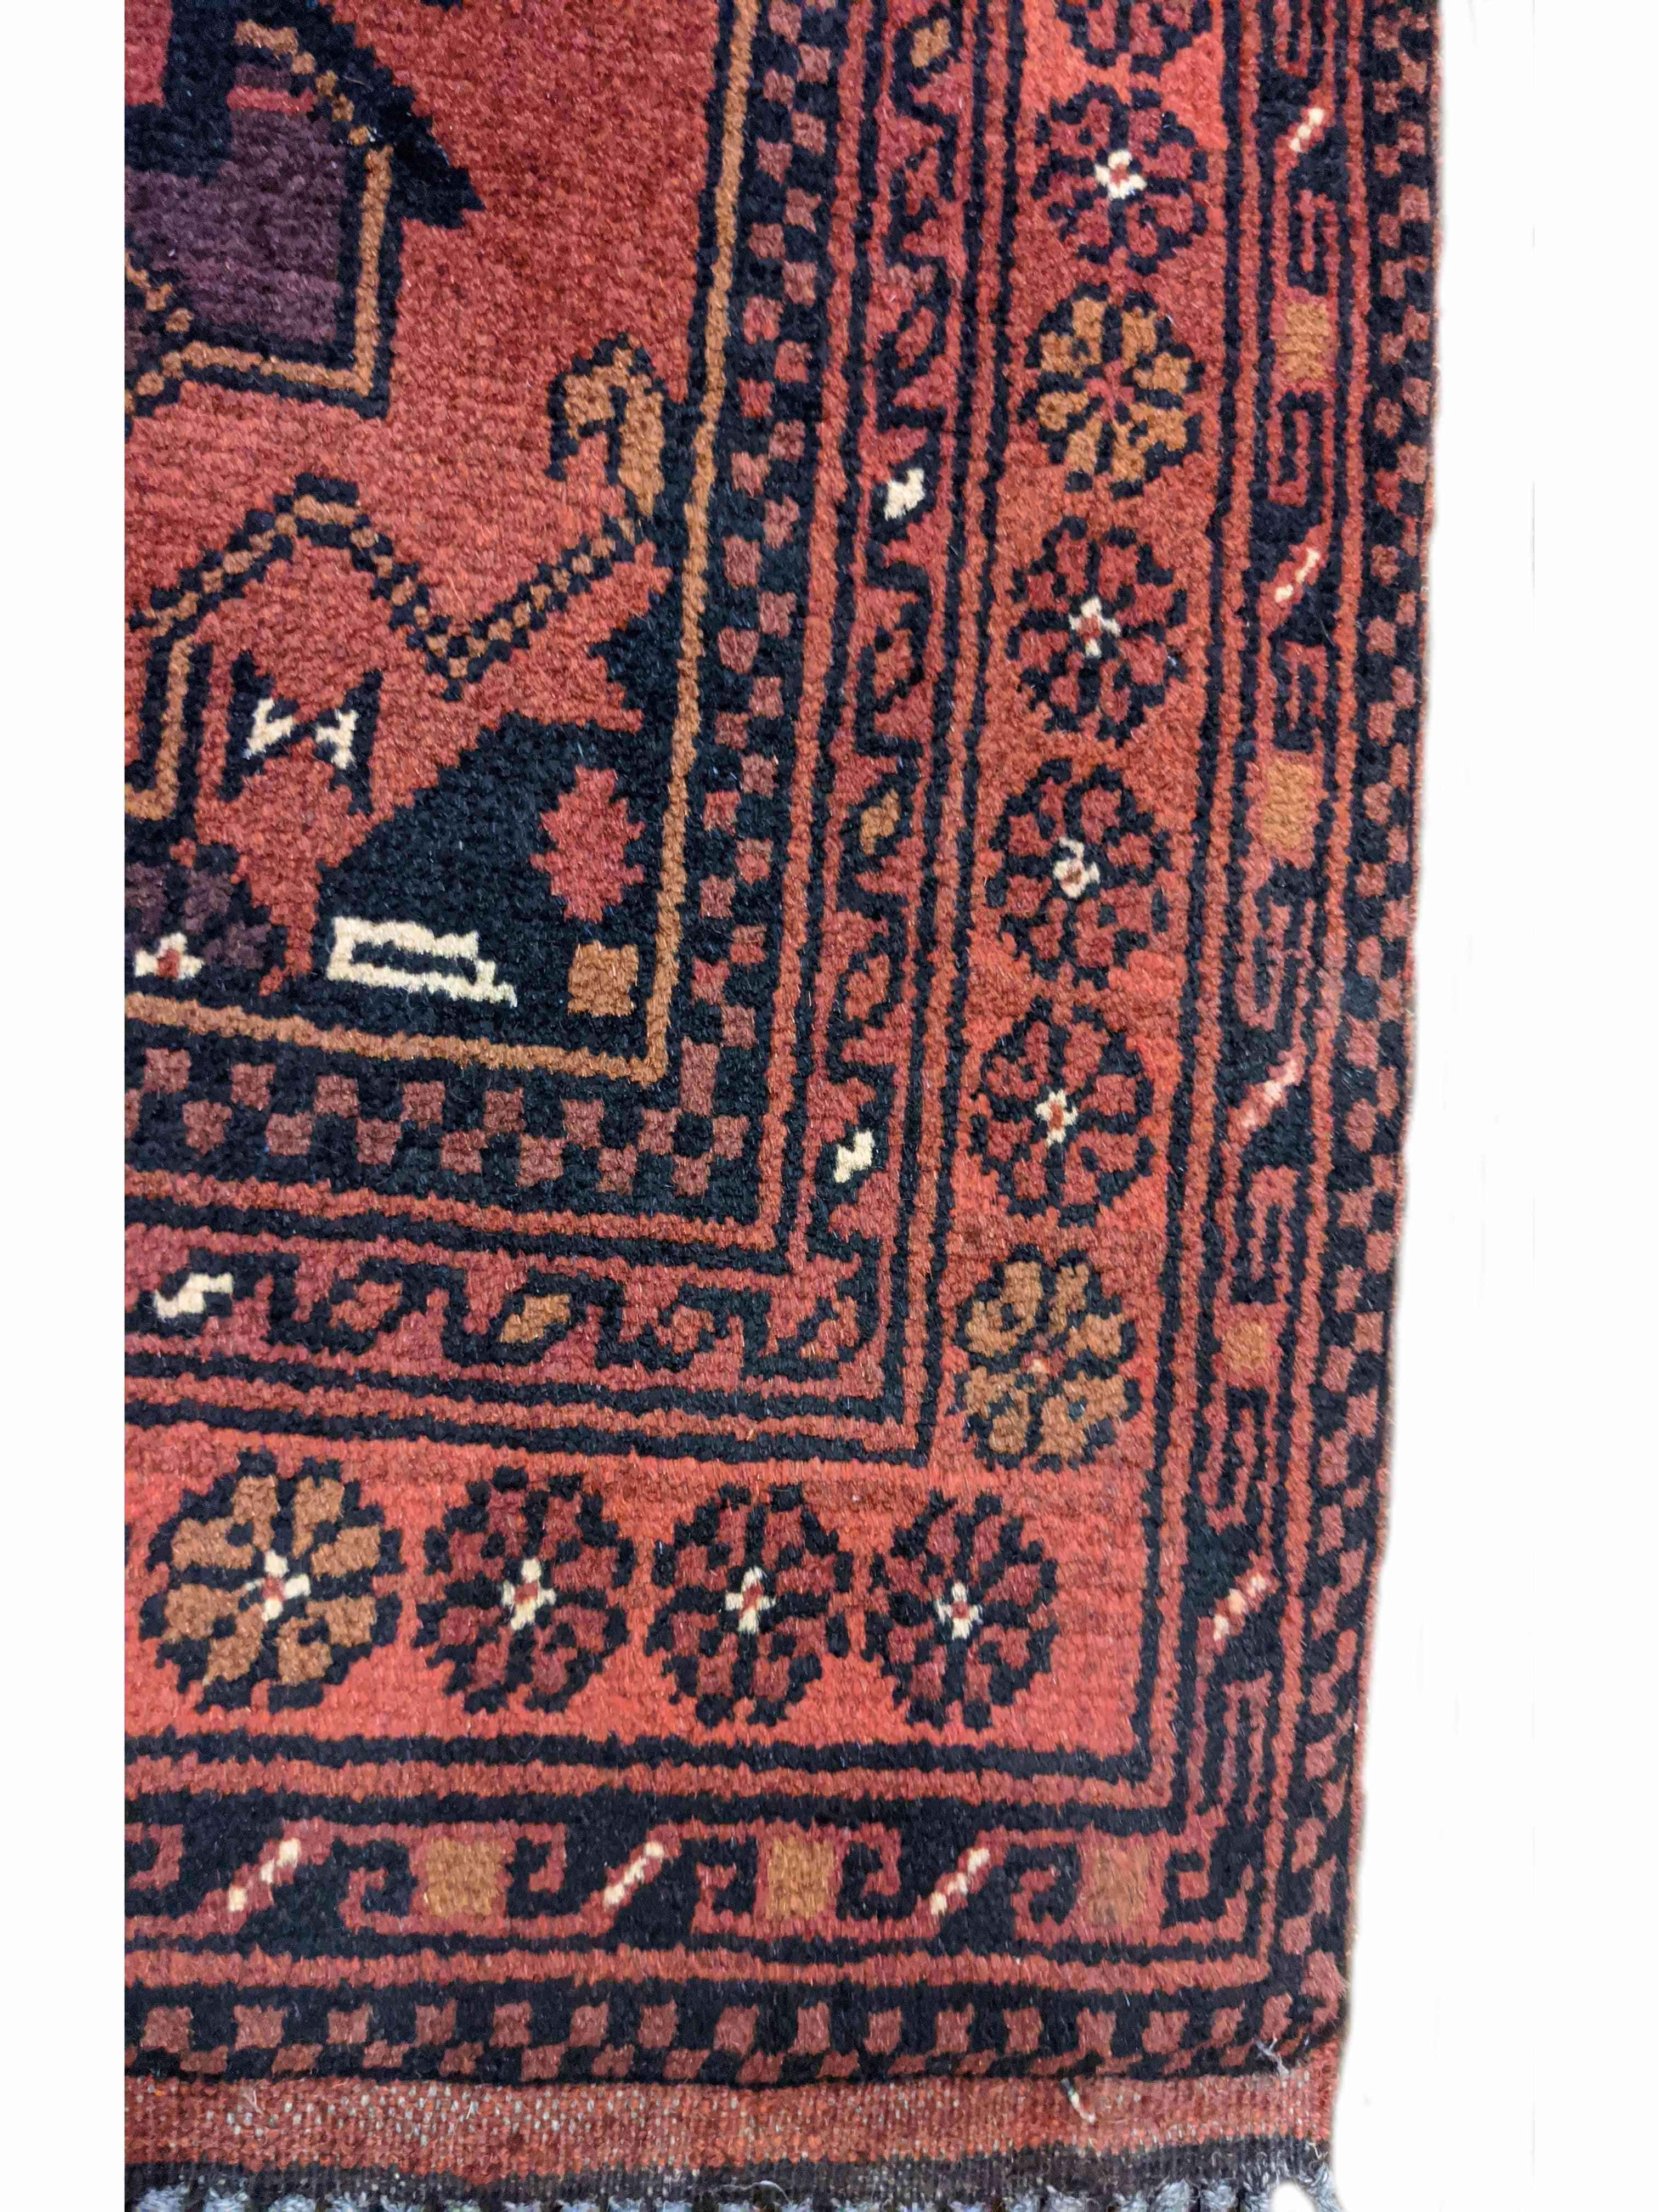 142 x 104 cm Afghan Khan Tribal Orange Rug - Rugmaster